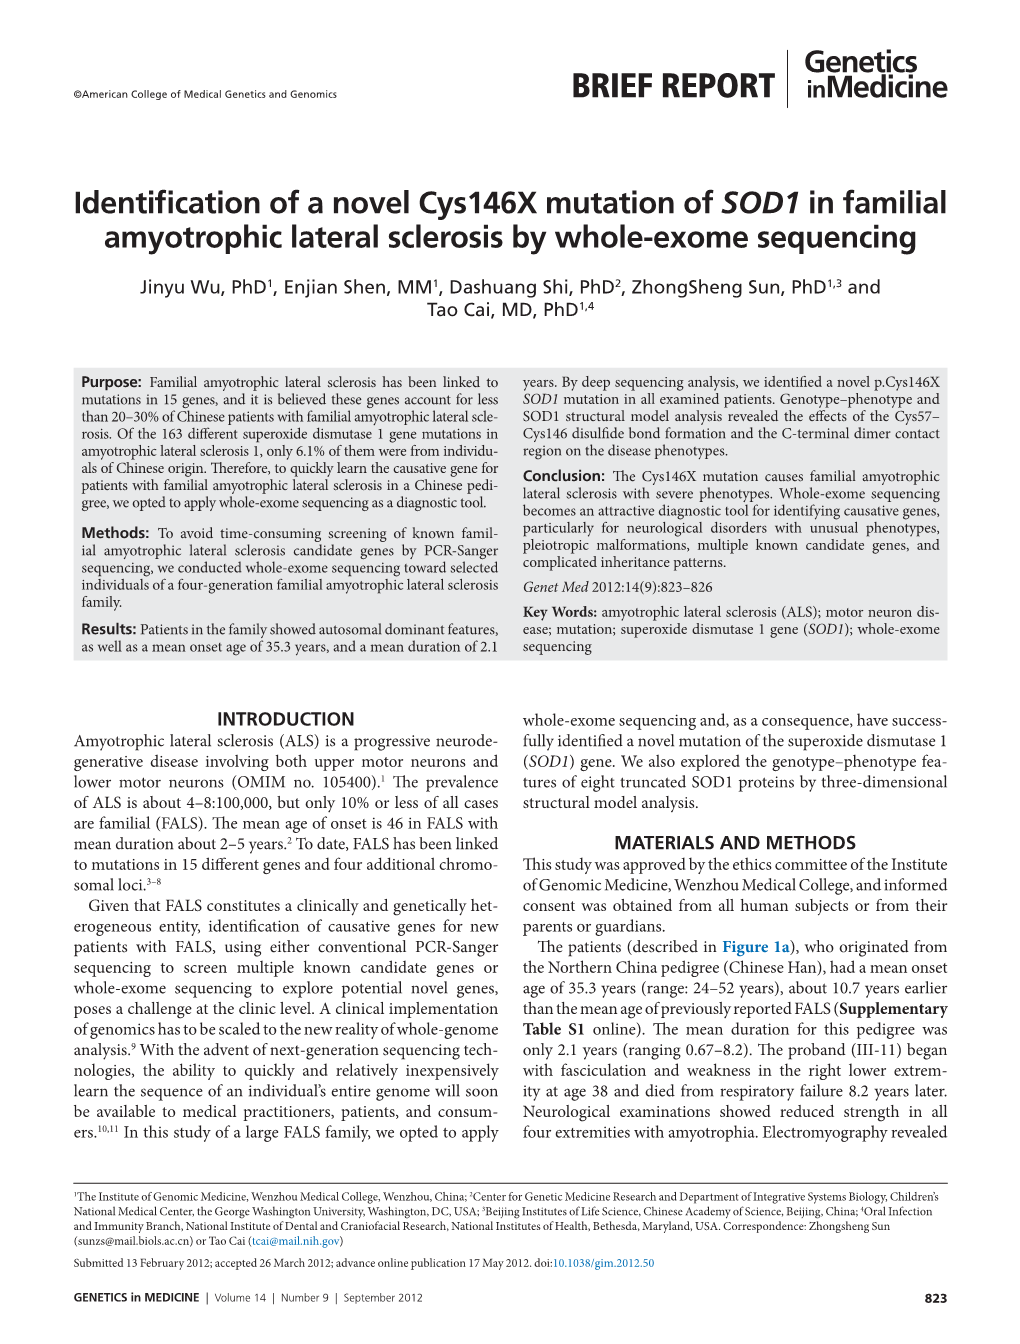 Identification of a Novel Cys146x Mutation of SOD1 in Familial